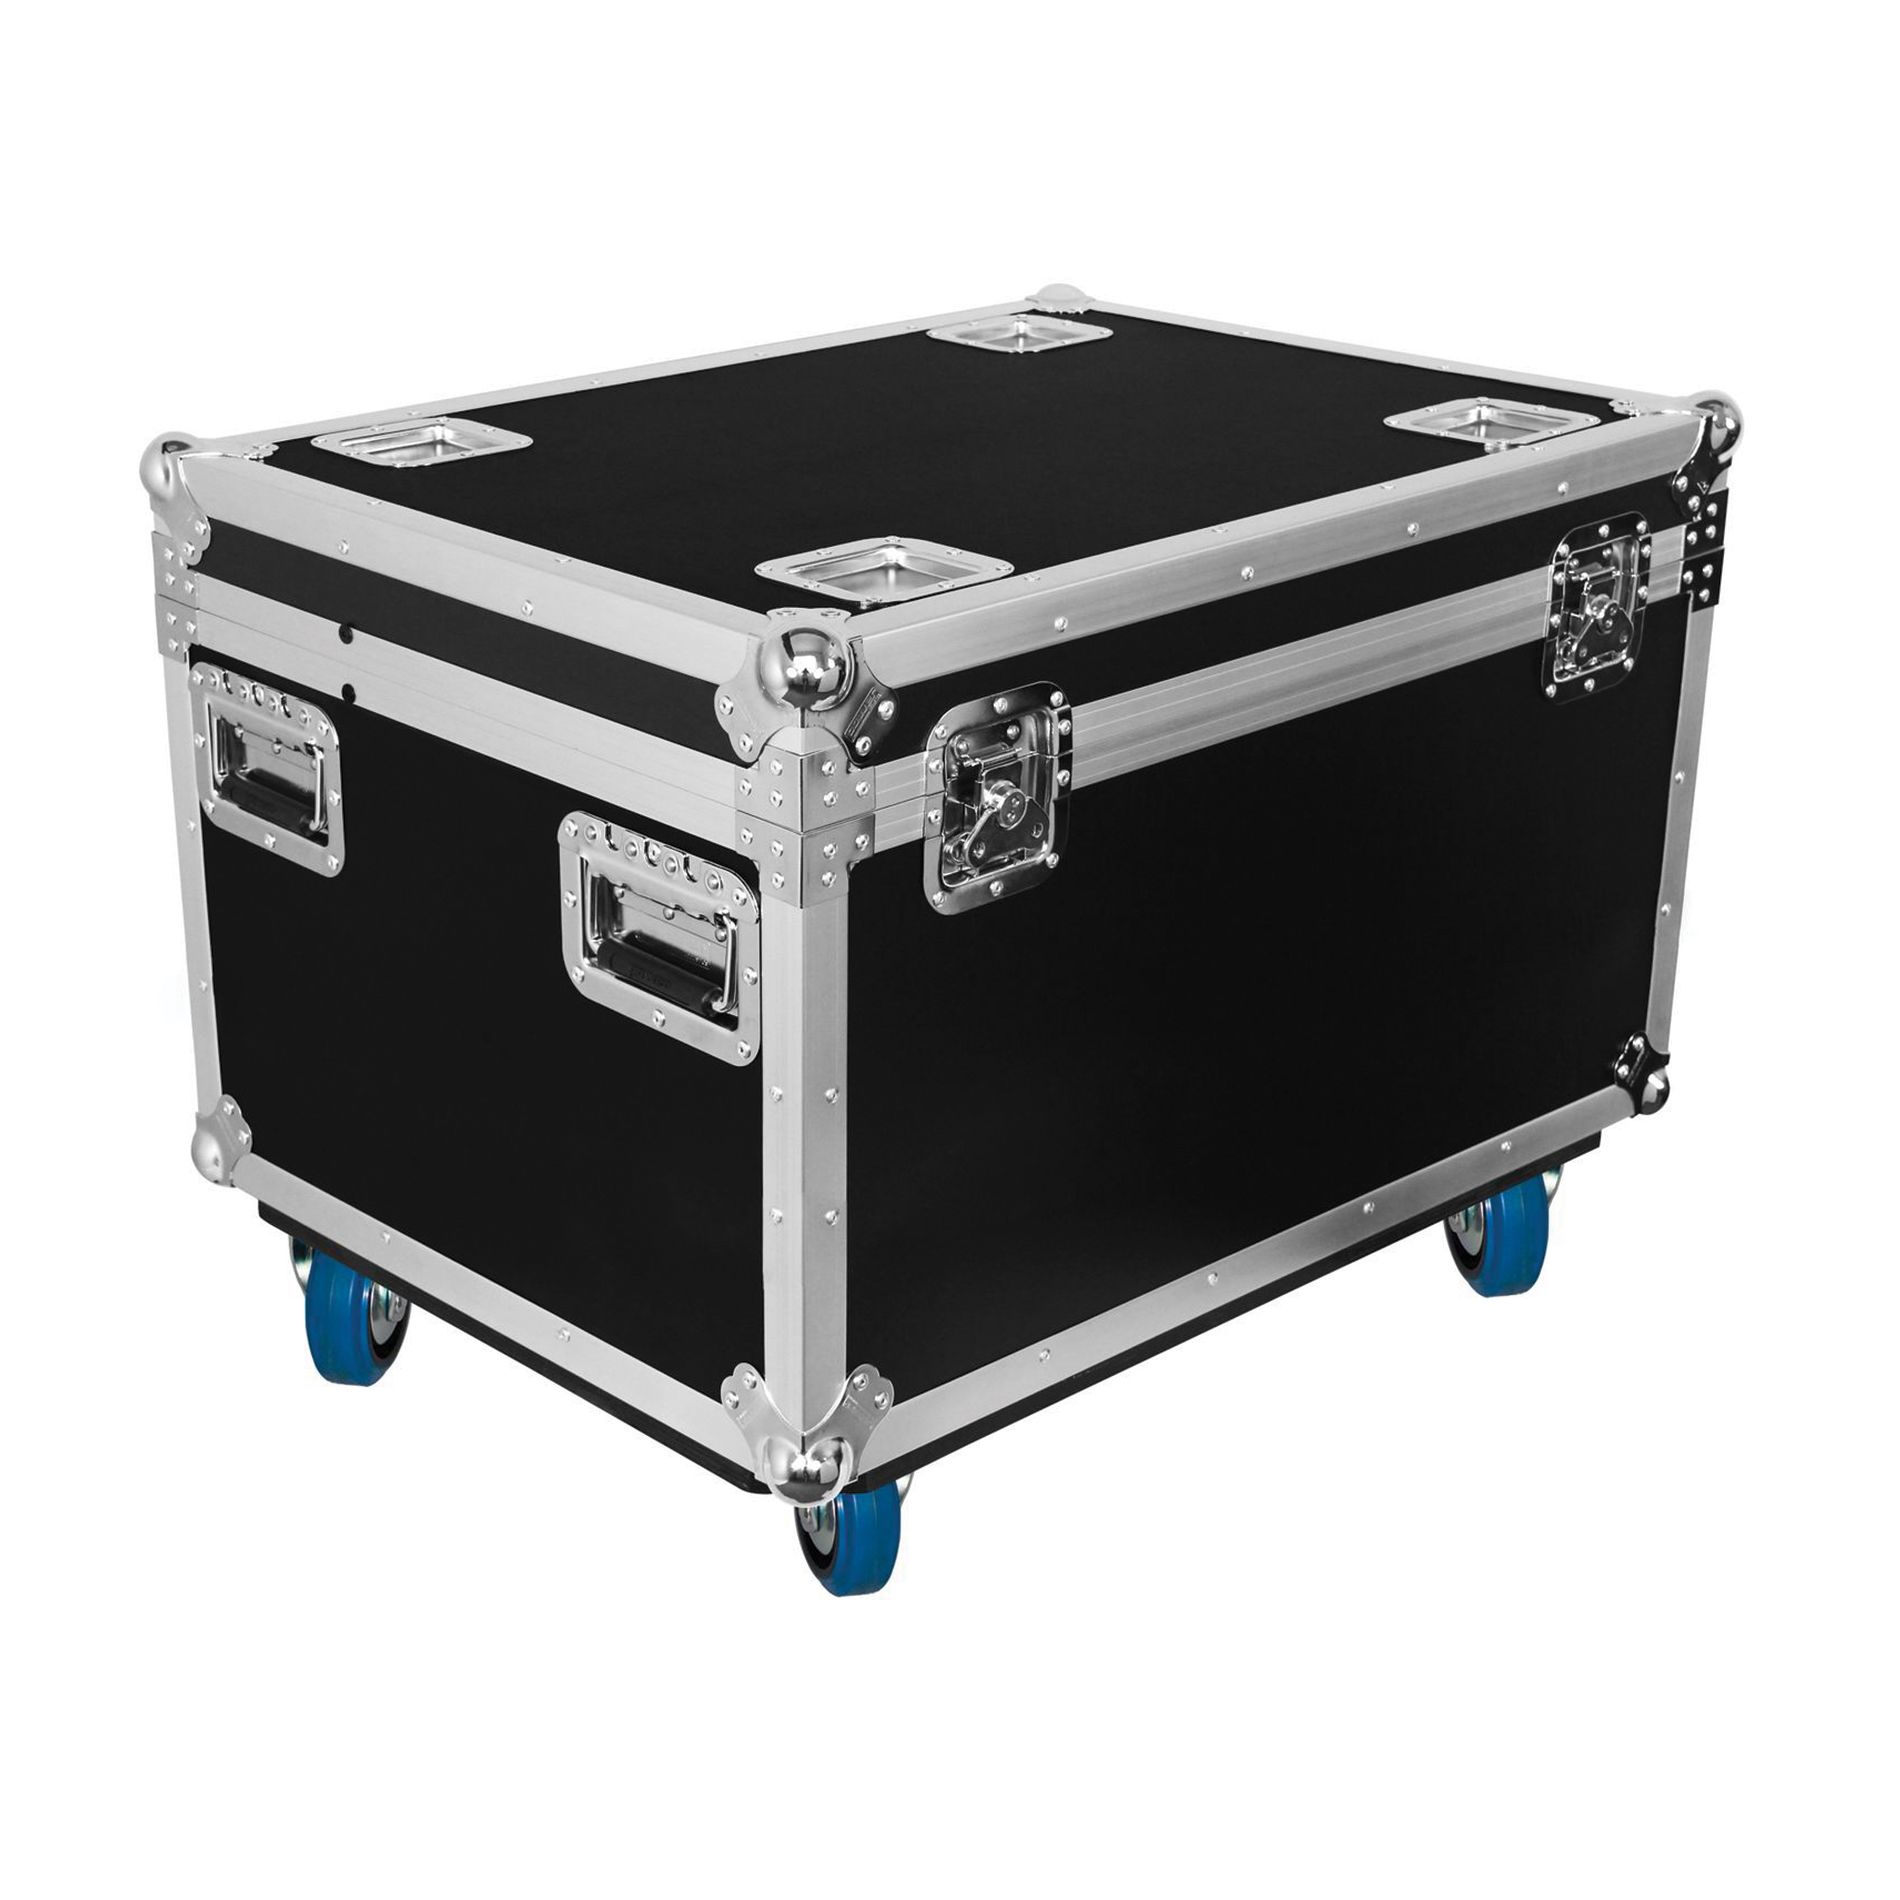 Power Acoustics Flight Case Utilitaire Multi-usages Avec Roues + Coupelles - Bag & flightcase for lighting equipment - Variation 2